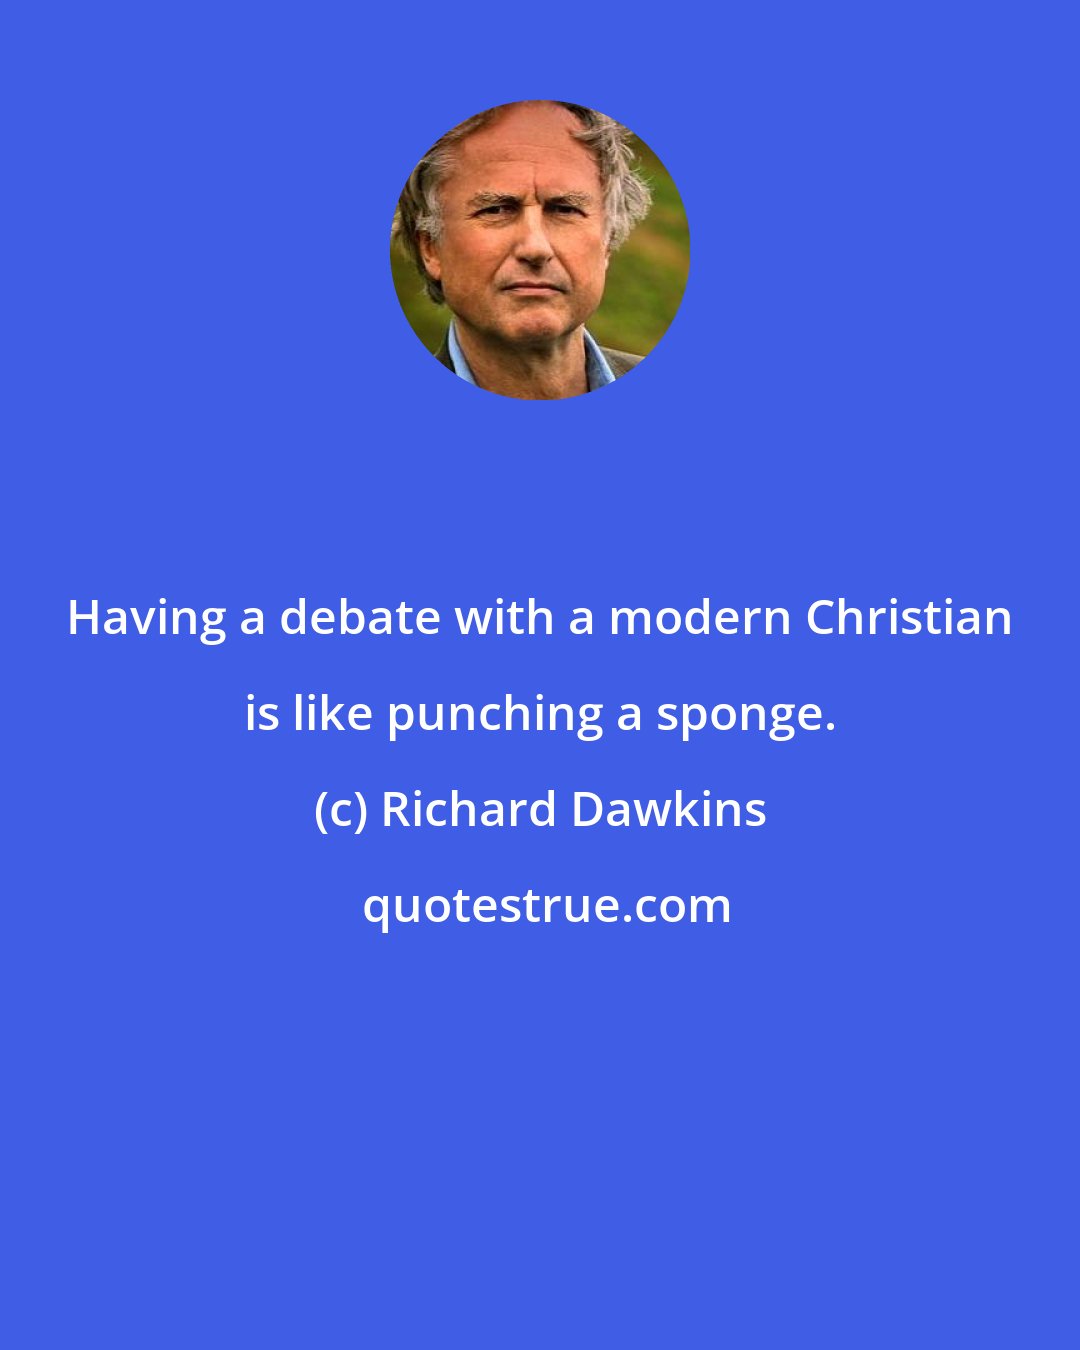 Richard Dawkins: Having a debate with a modern Christian is like punching a sponge.